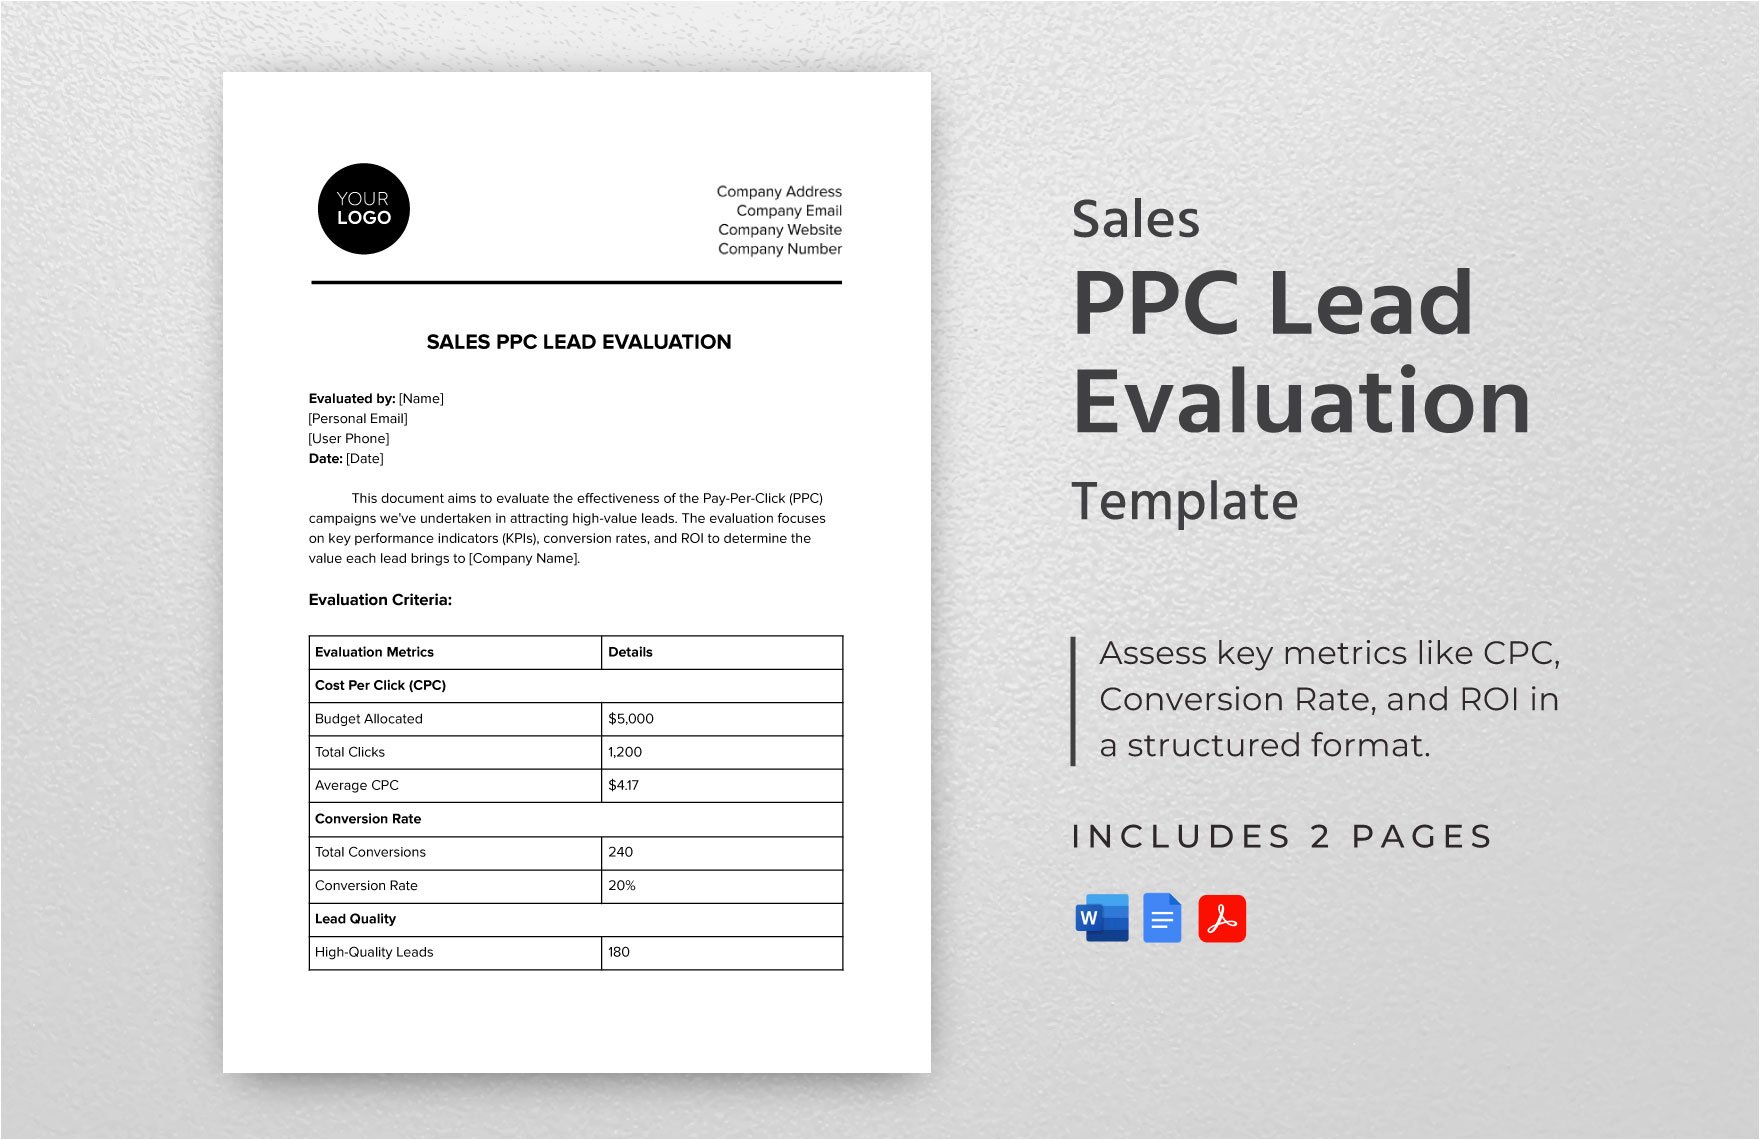 Sales PPC Lead Evaluation Template